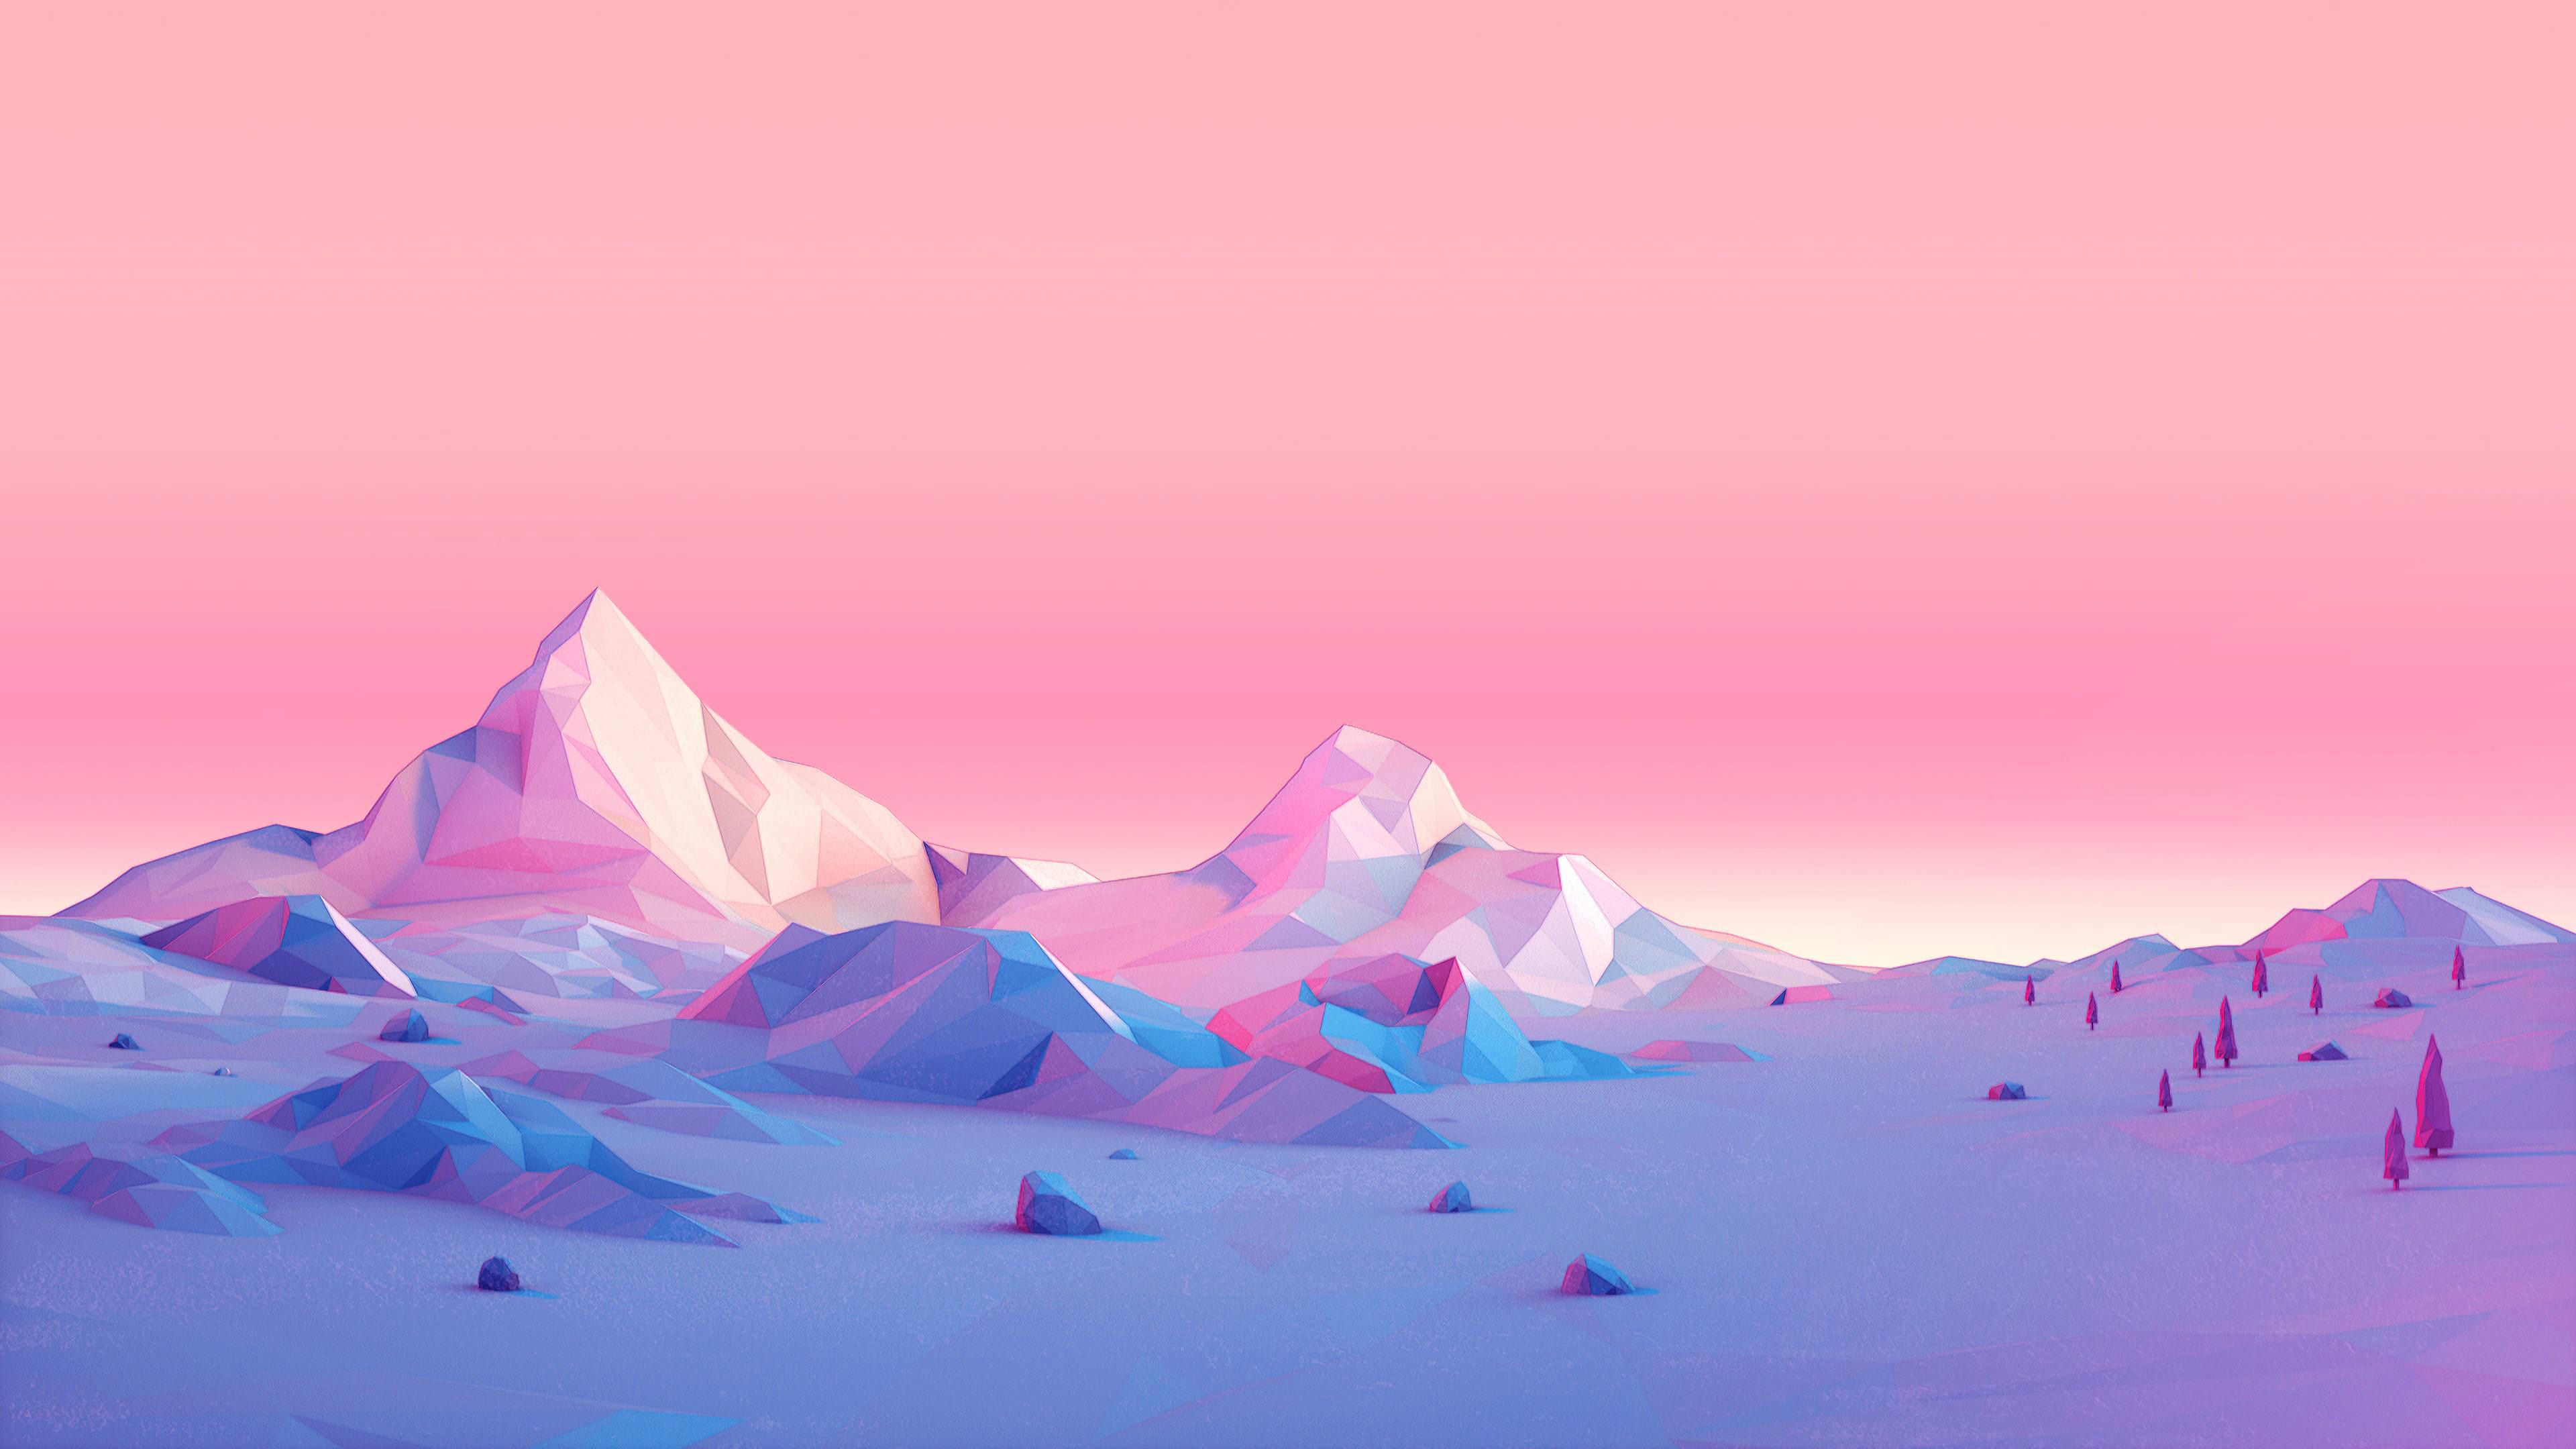 Polygon Mountains Minimalist, HD Artist, 4k Wallpaper, Image